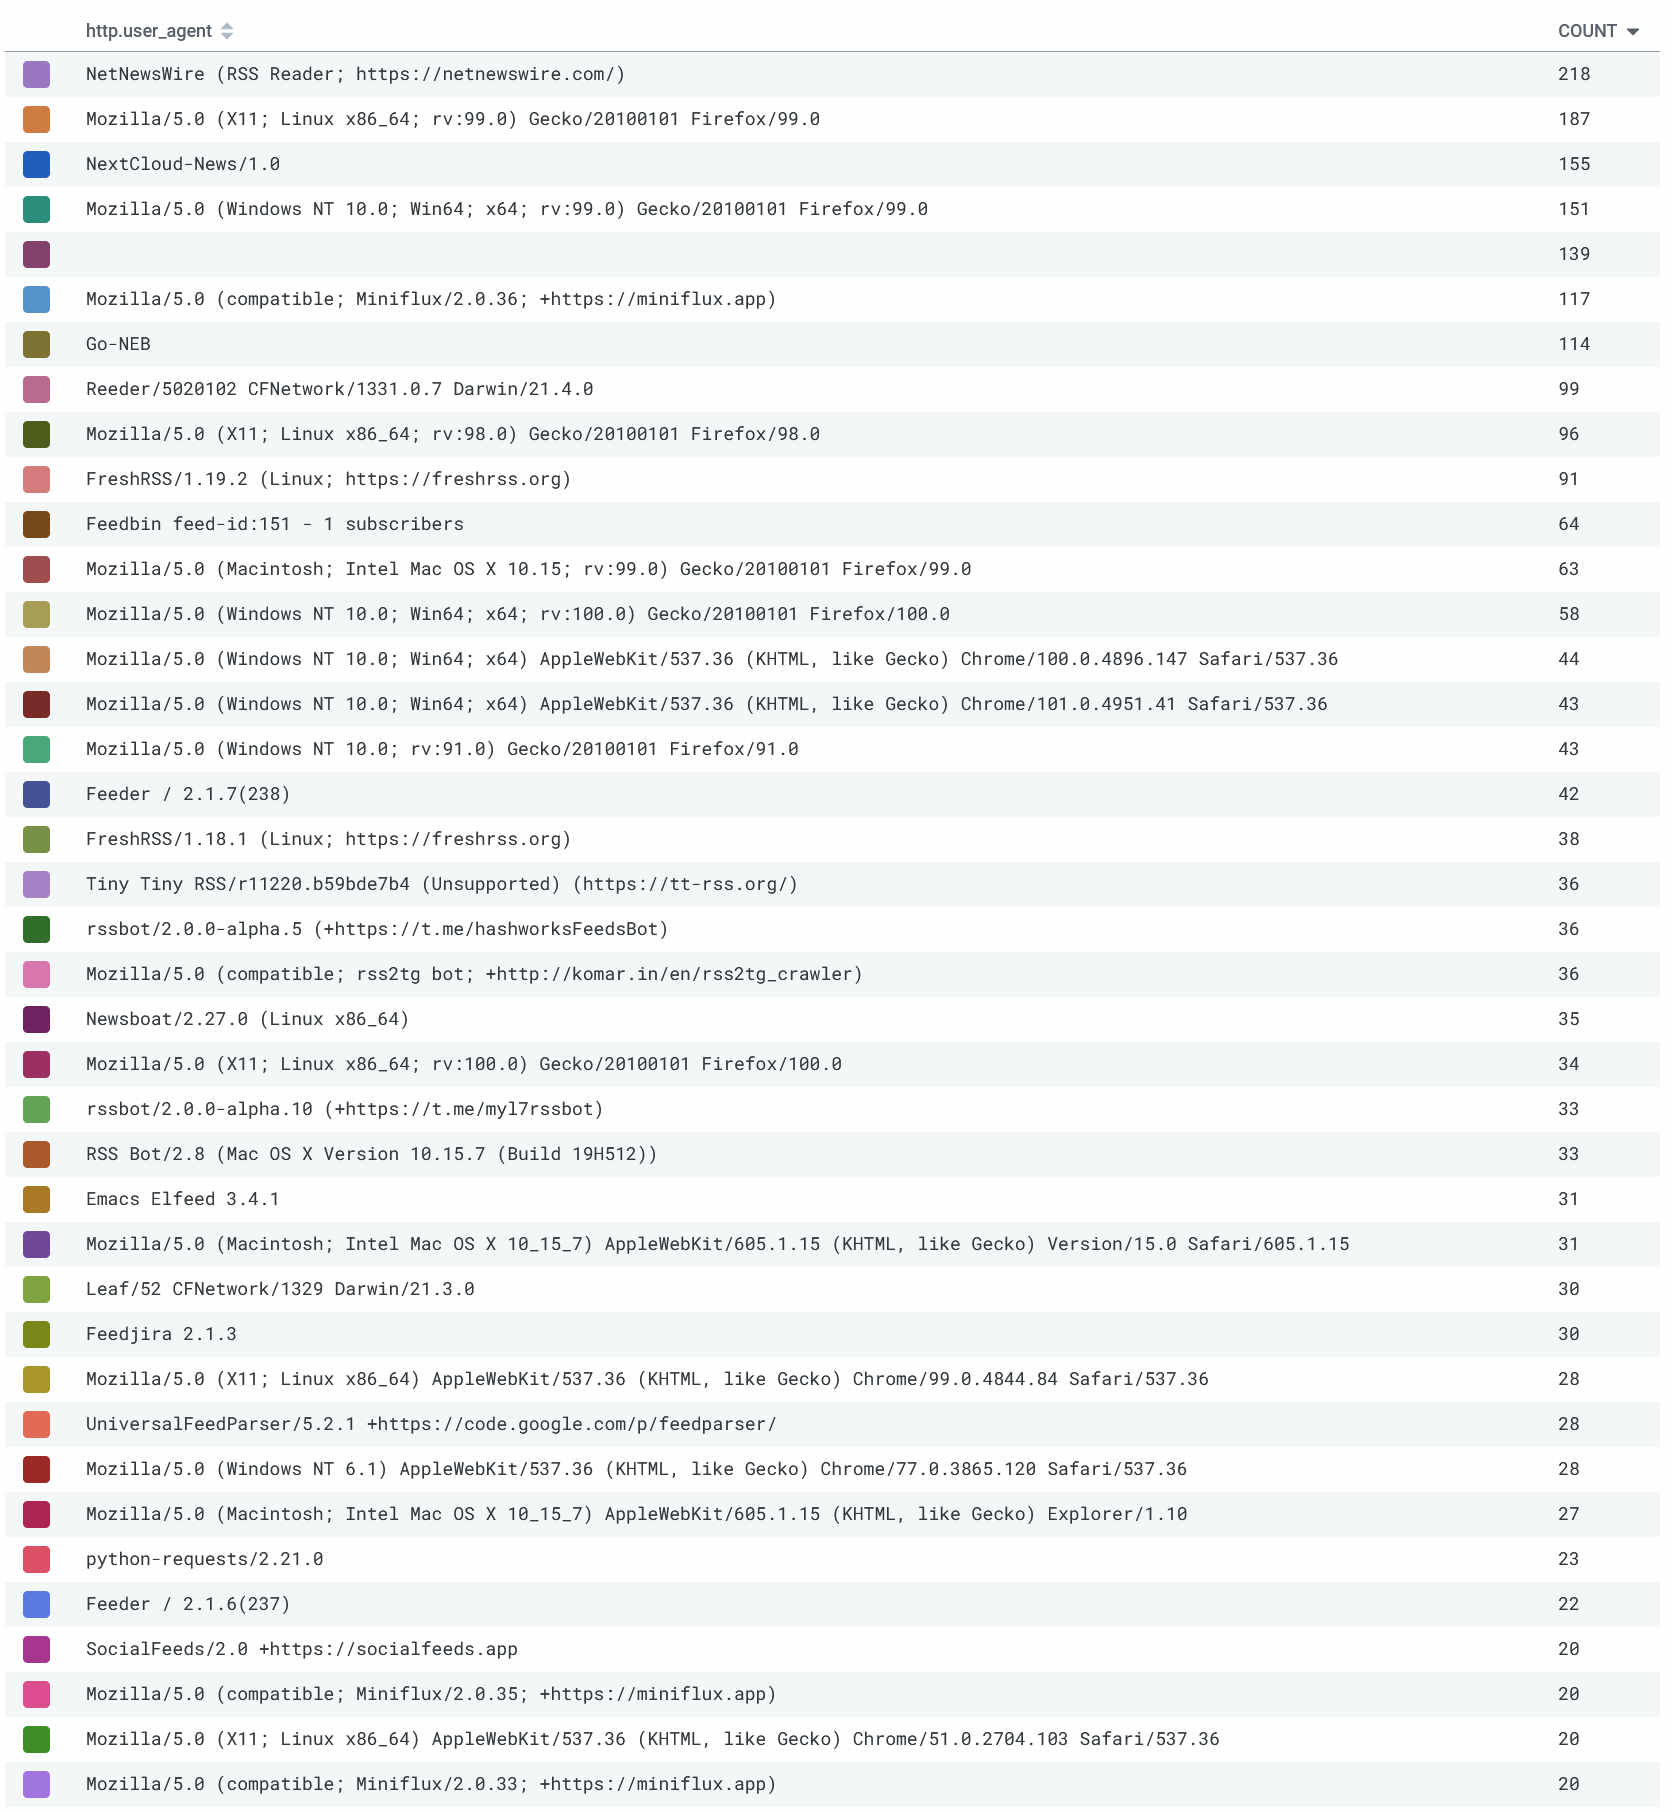 honeycomb screenshot showing just top user agents: there's now Firefox 99, miniflux.app, Safari, Explorer (not internet explorer), etc.